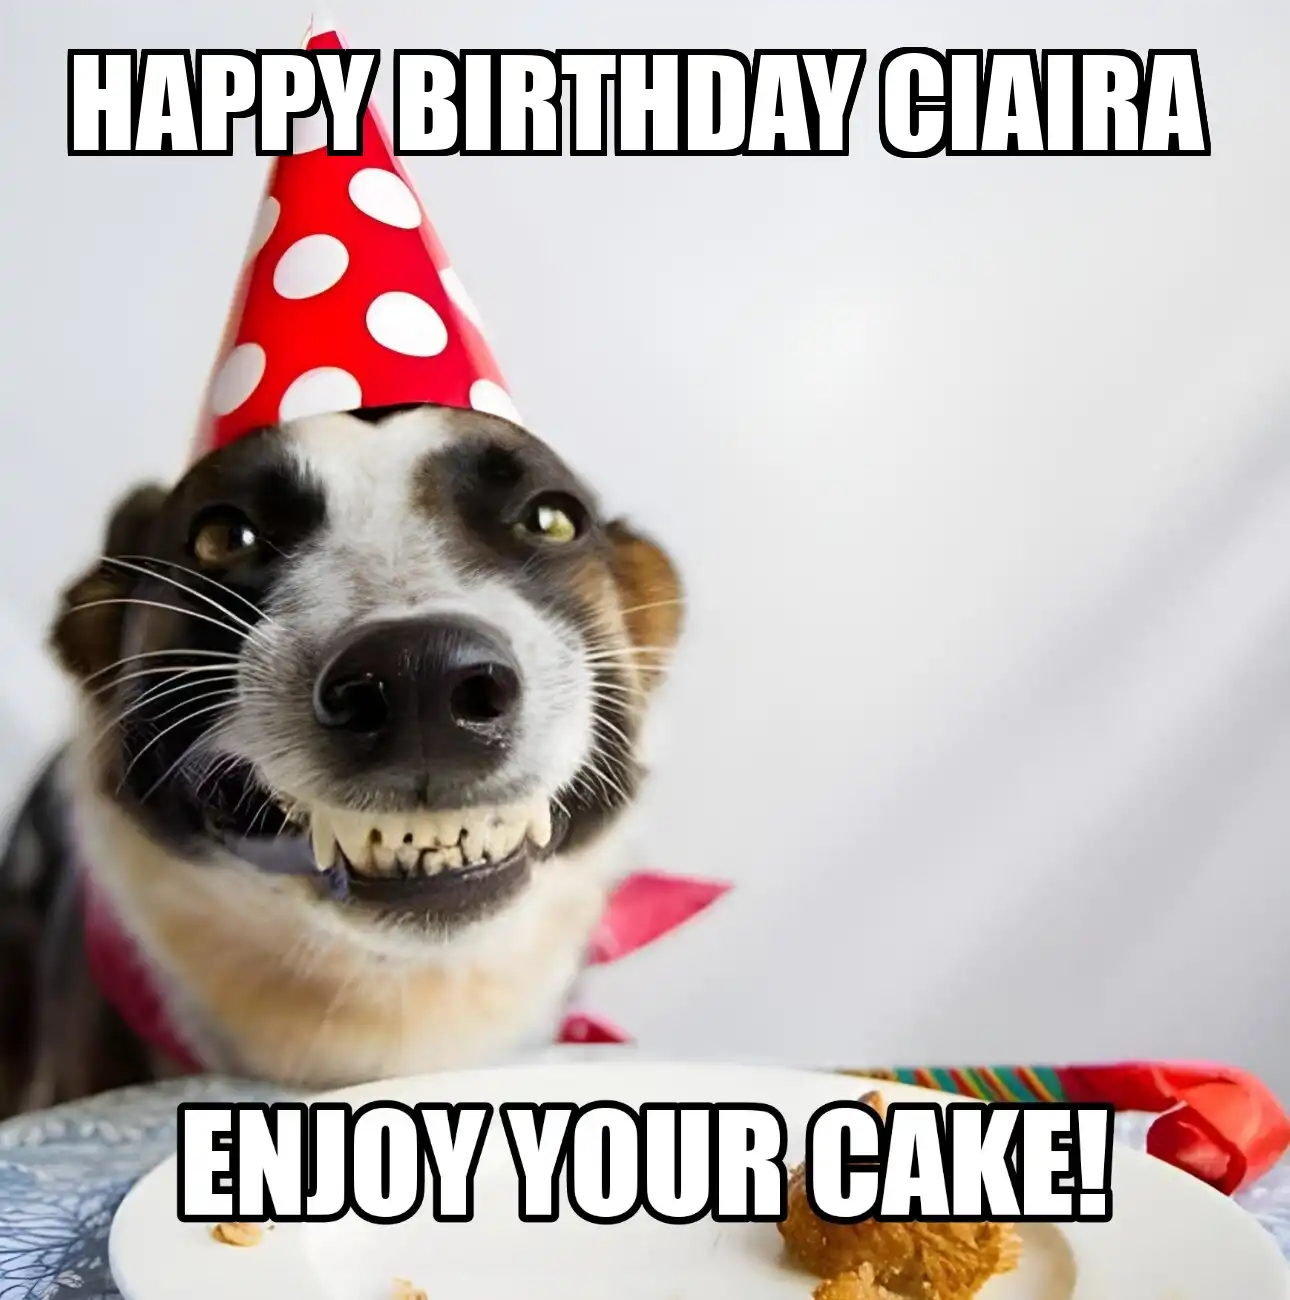 Happy Birthday Ciaira Enjoy Your Cake Dog Meme